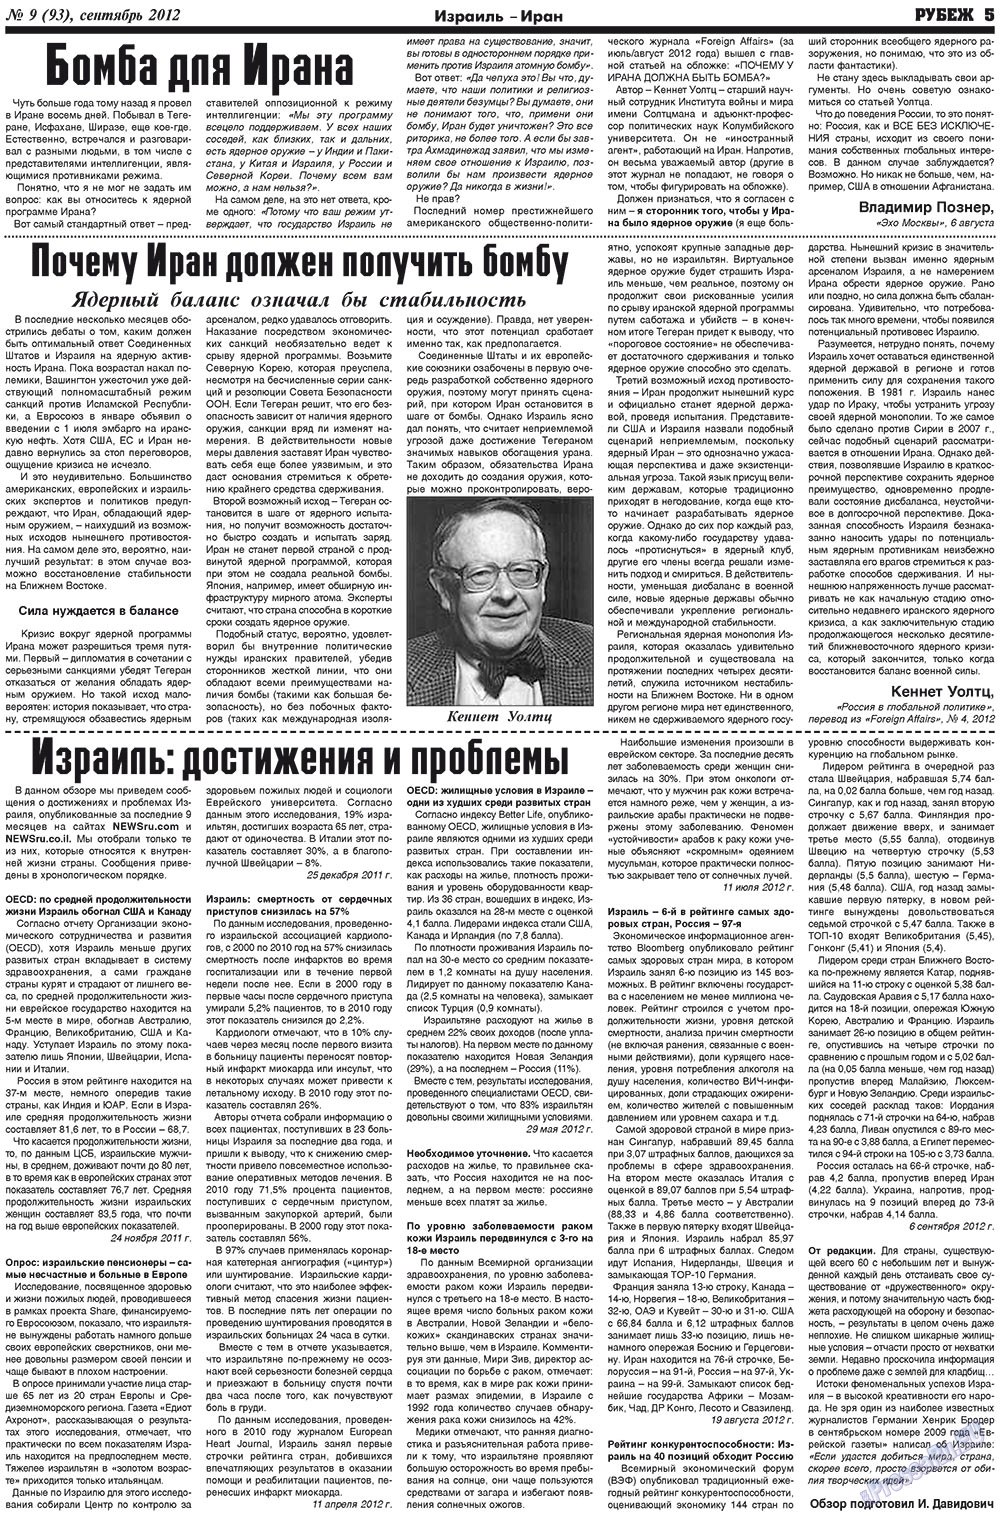 Рубеж, газета. 2012 №9 стр.5